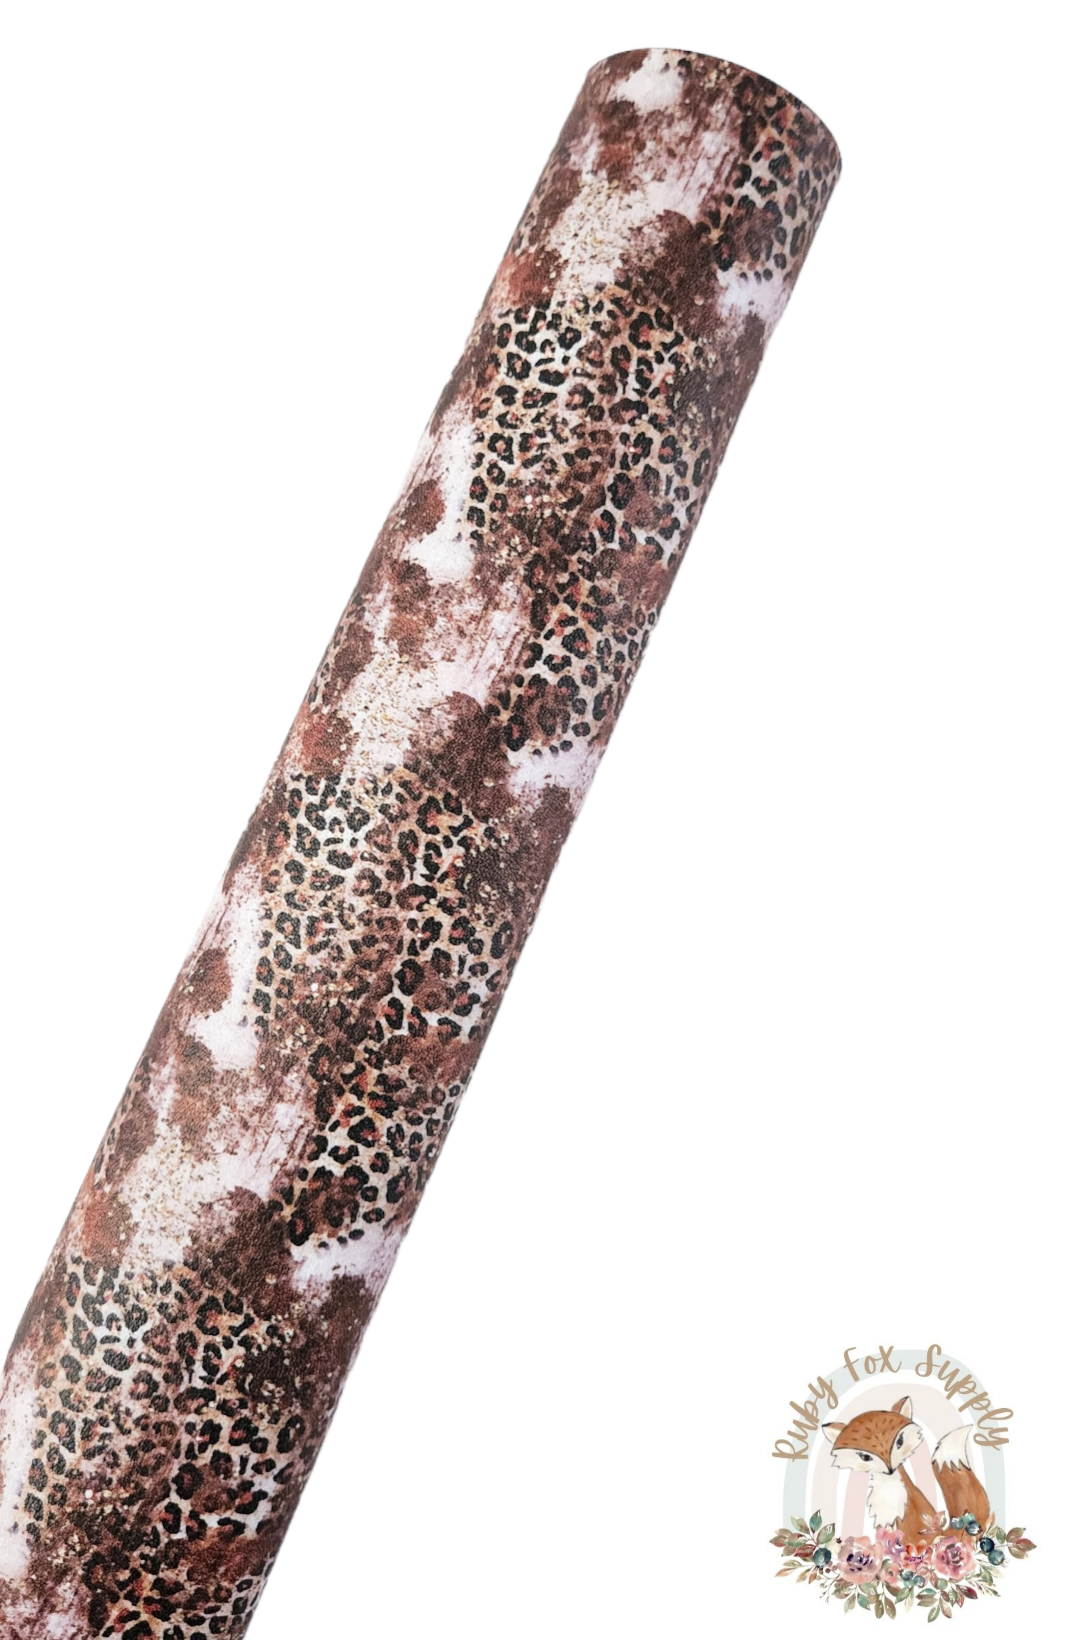 Cheetah Splatter 9x12 faux leather sheet